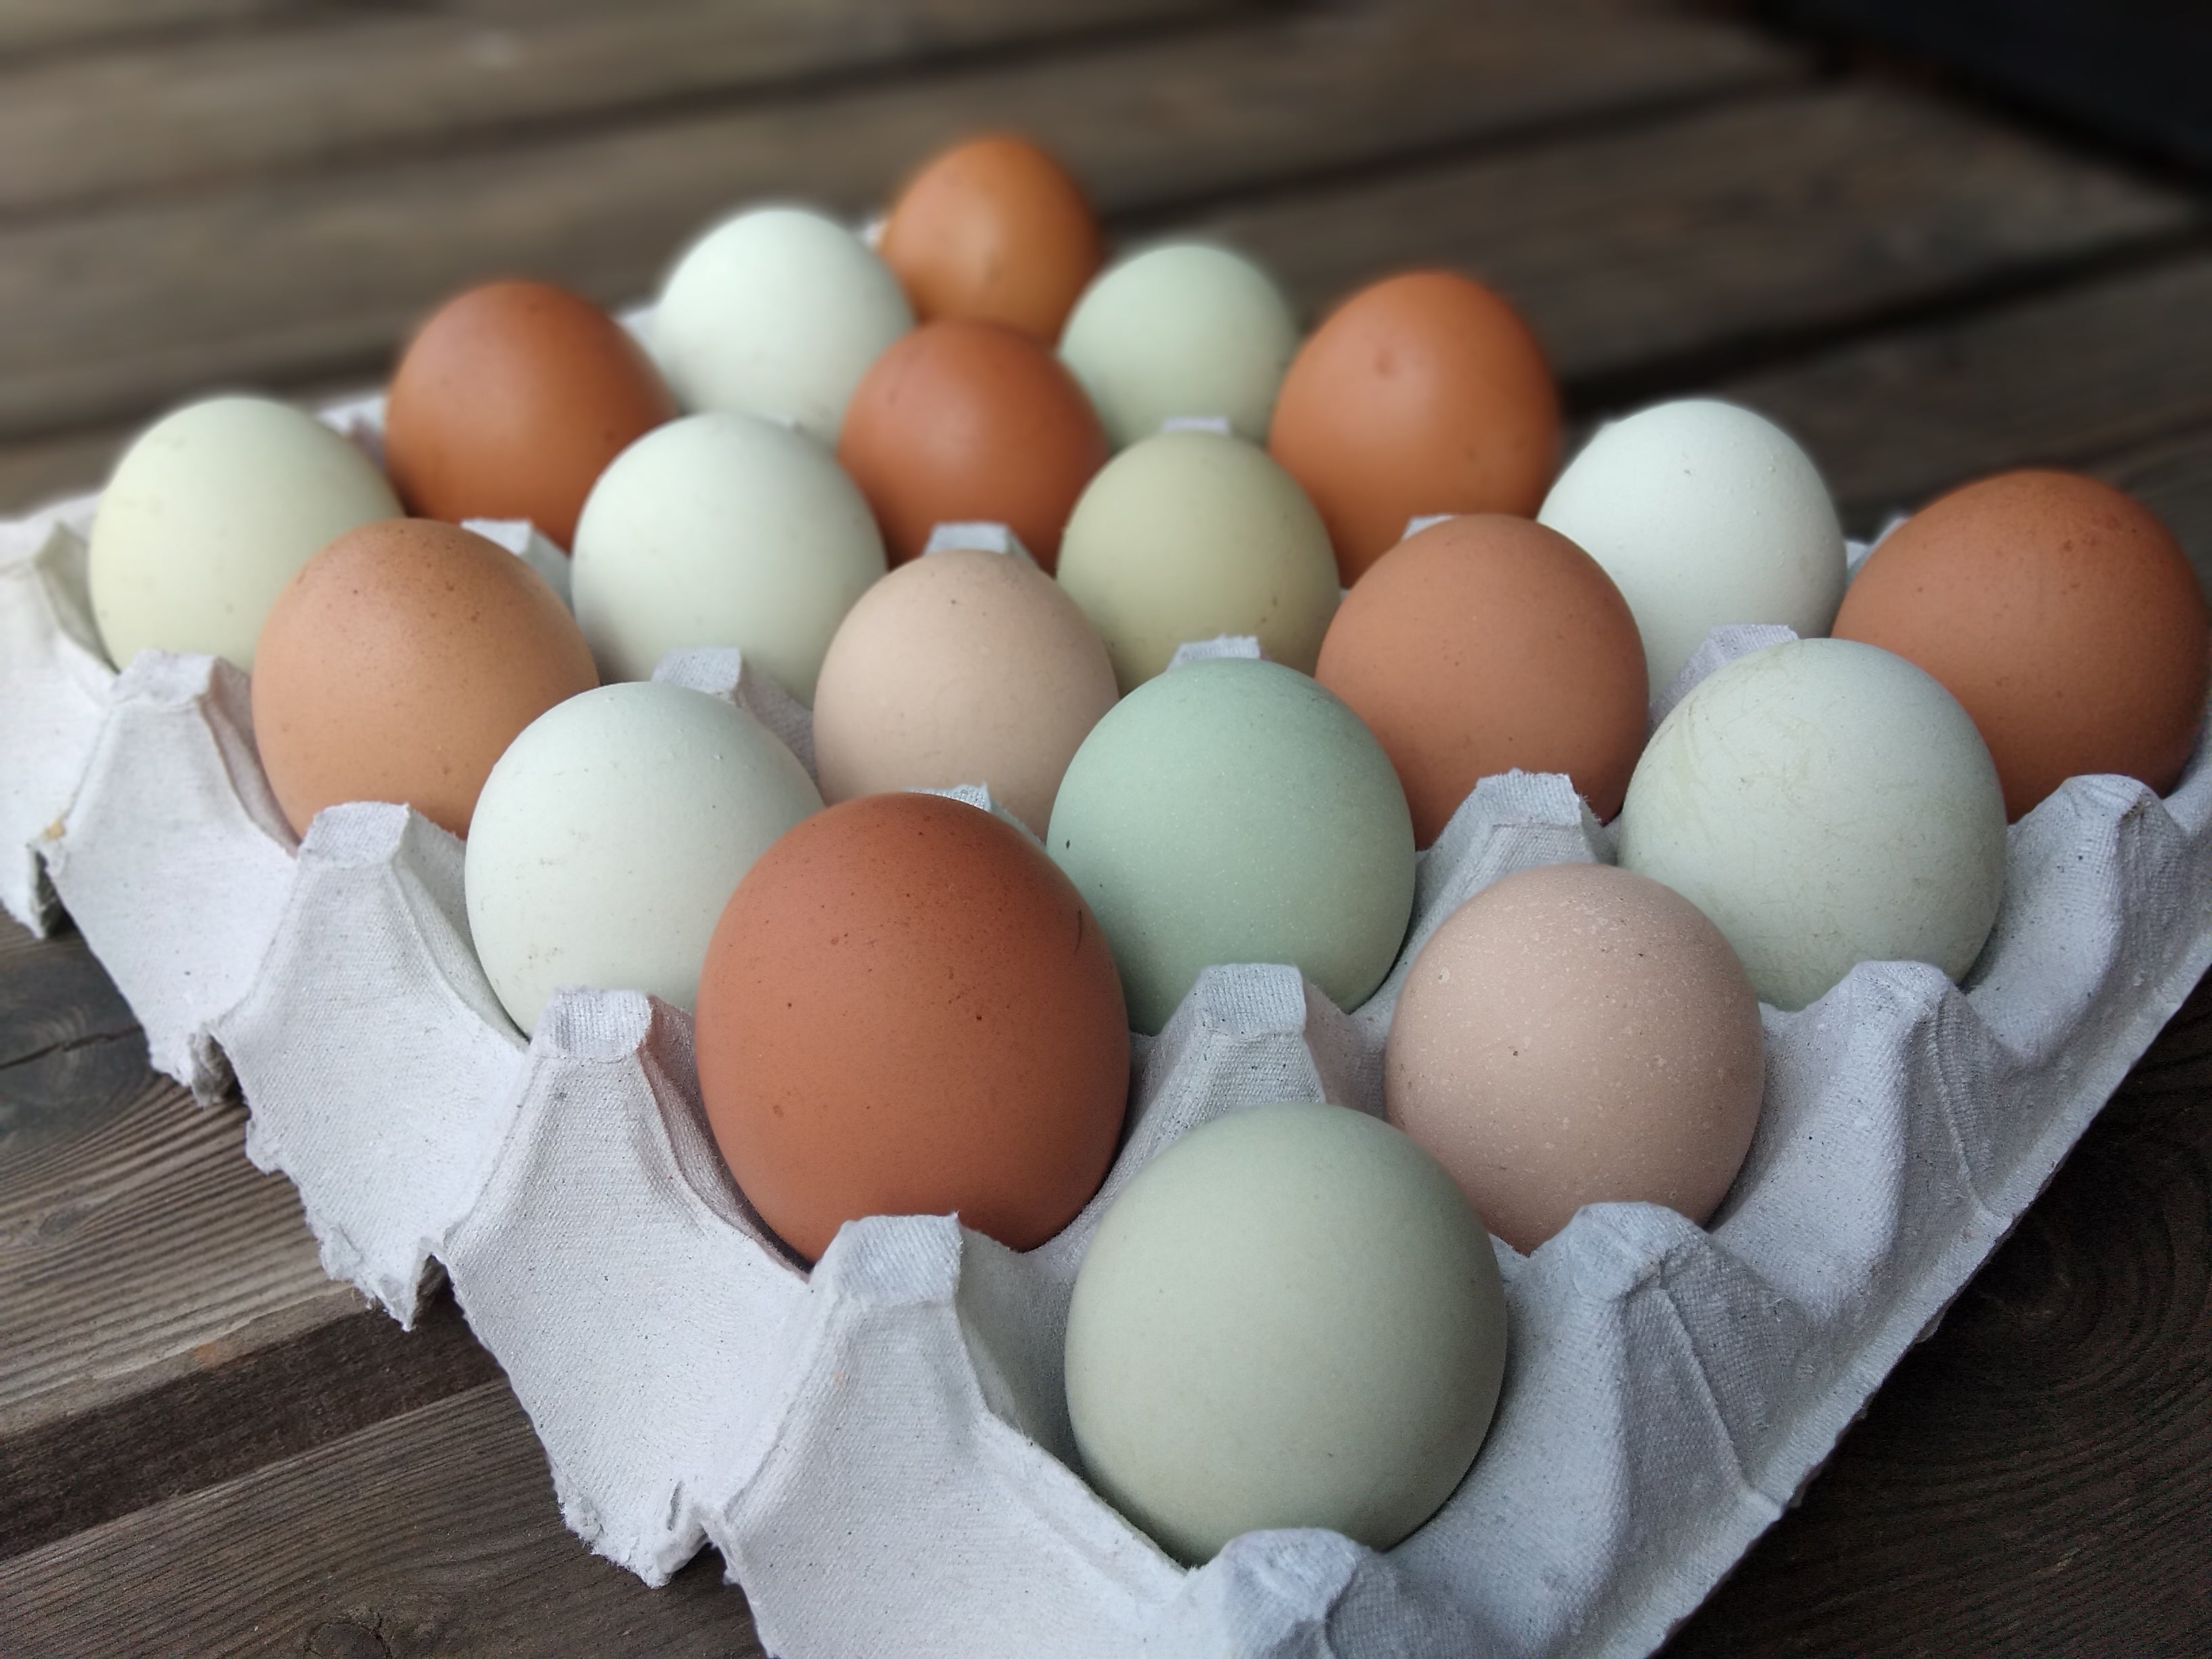 20 fresh farm eggs (includes shipping)